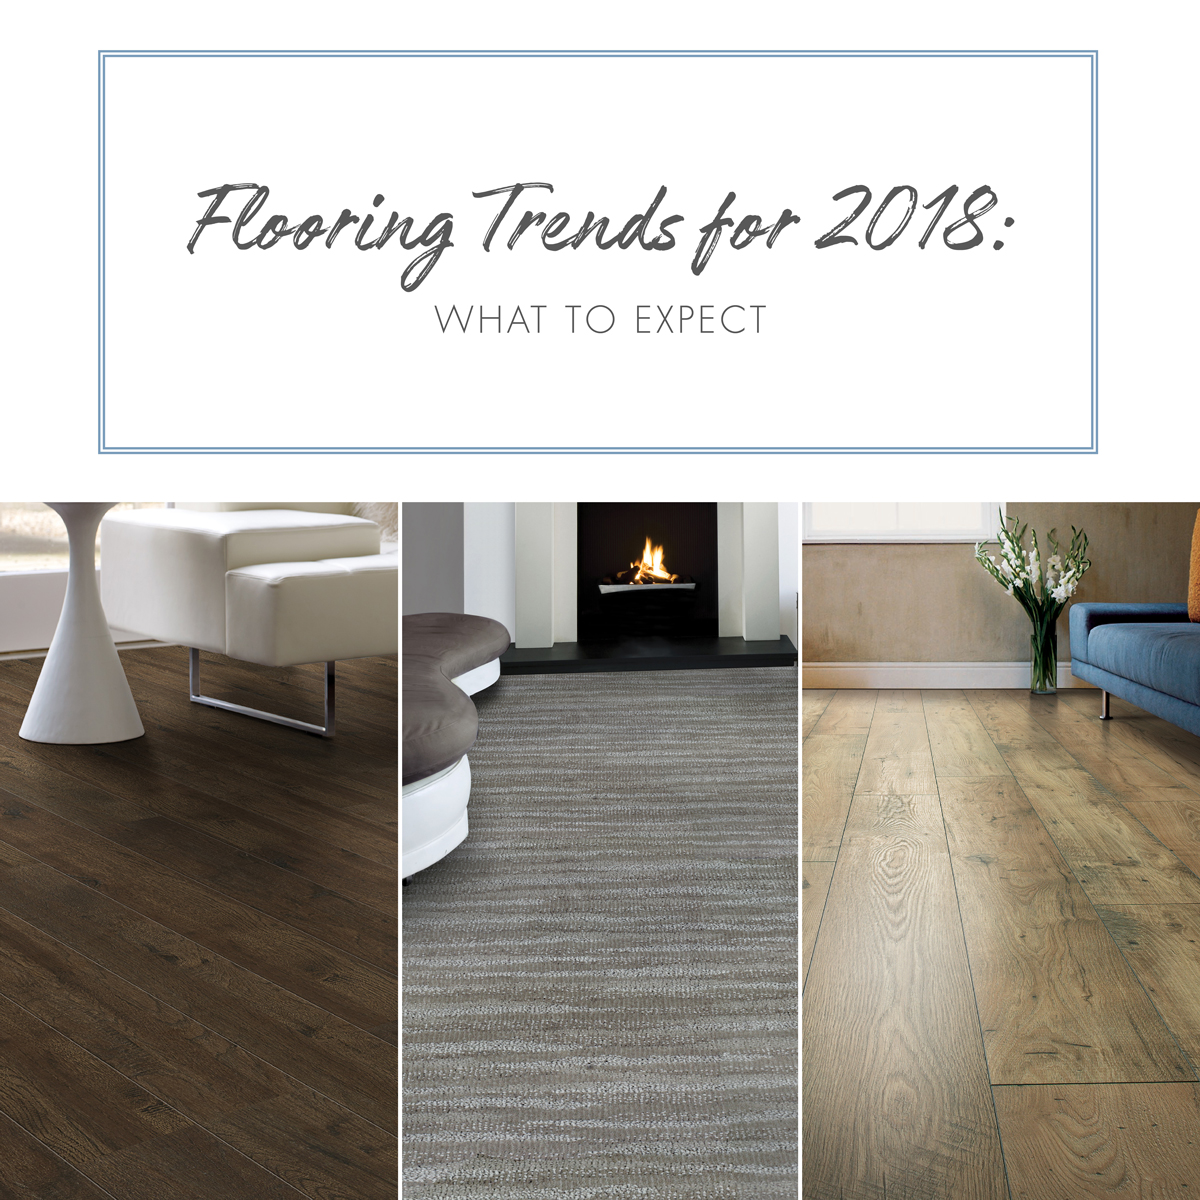 Flooring trends for 2018